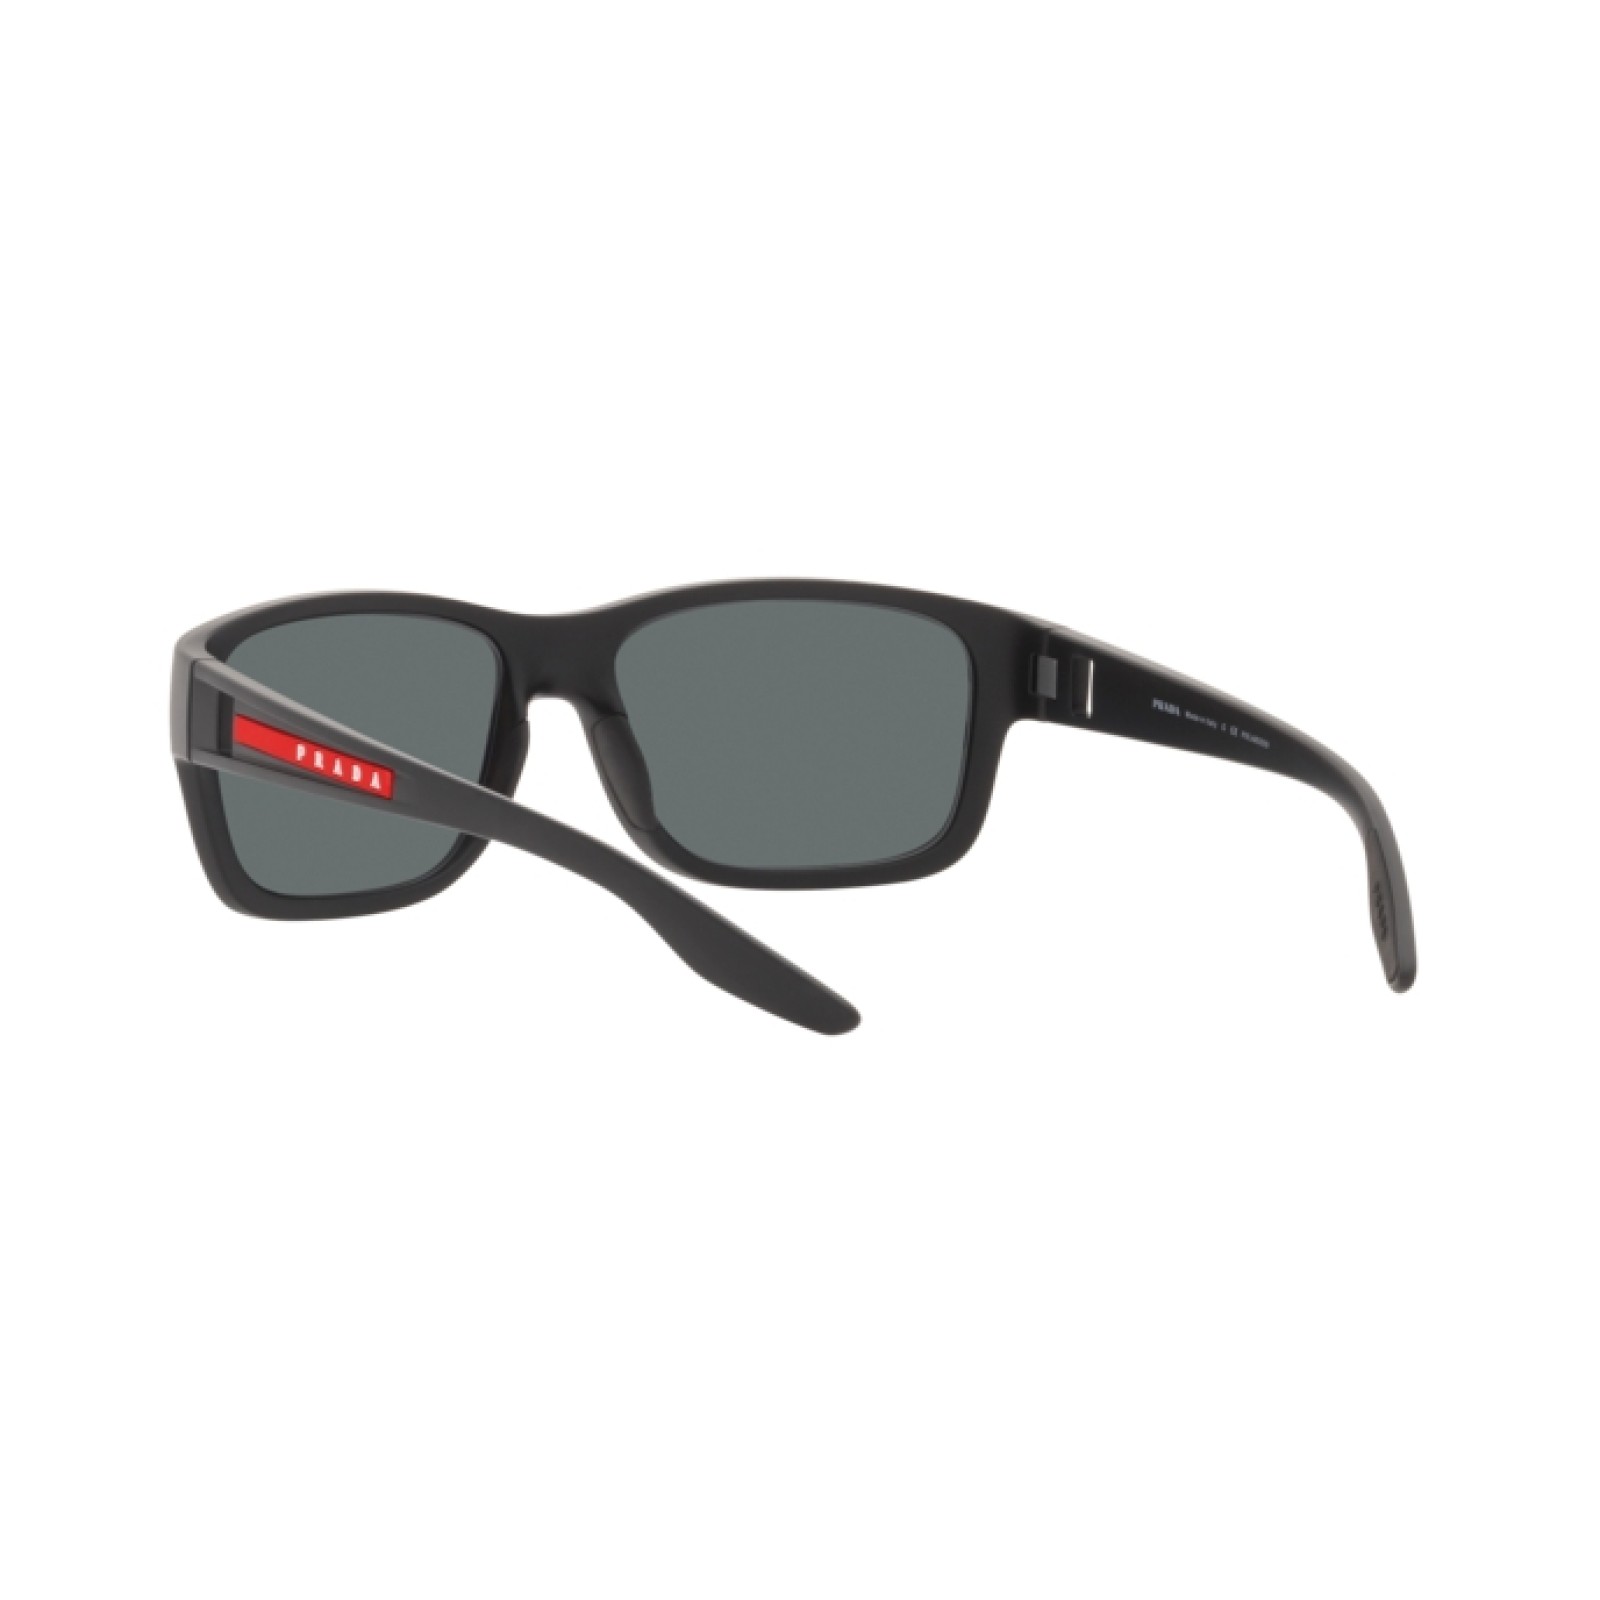 Prada Linea Rossa PS 01WS - DG002G Black Rubber | Sunglasses Man